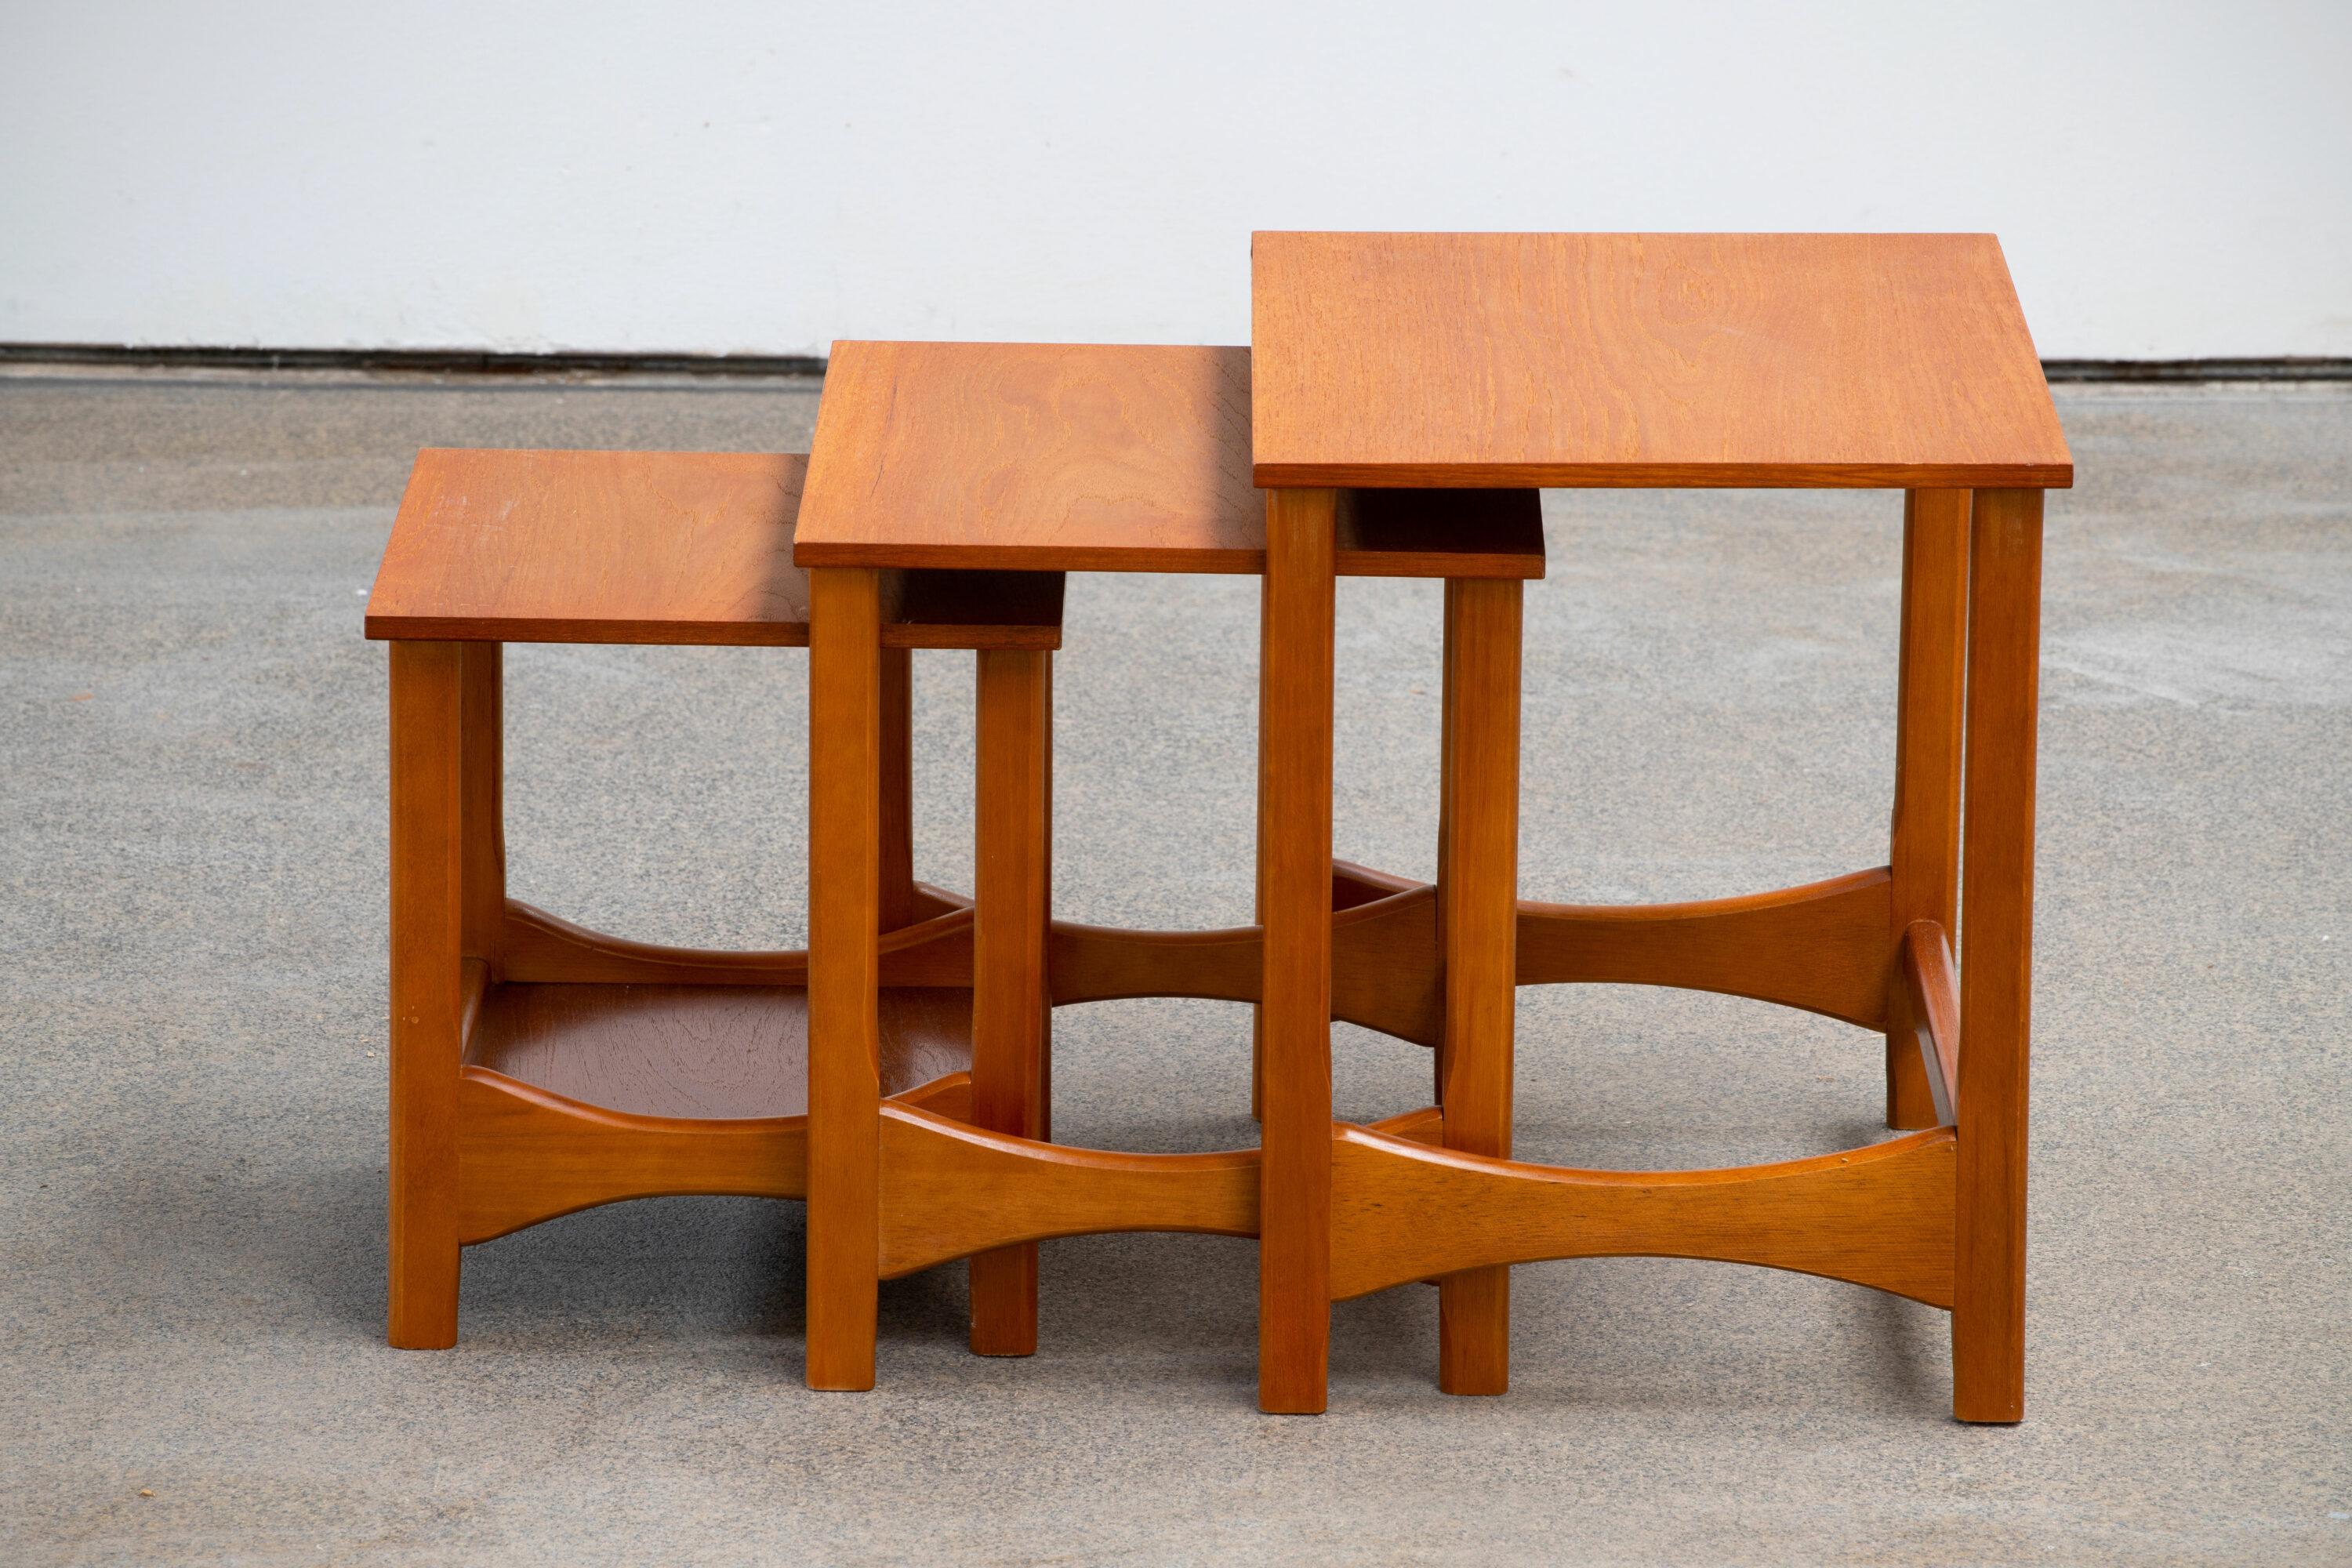 British Teak Midcentury Nesting Tables in Teak, Designed by Nathan, UK, 1960s For Sale